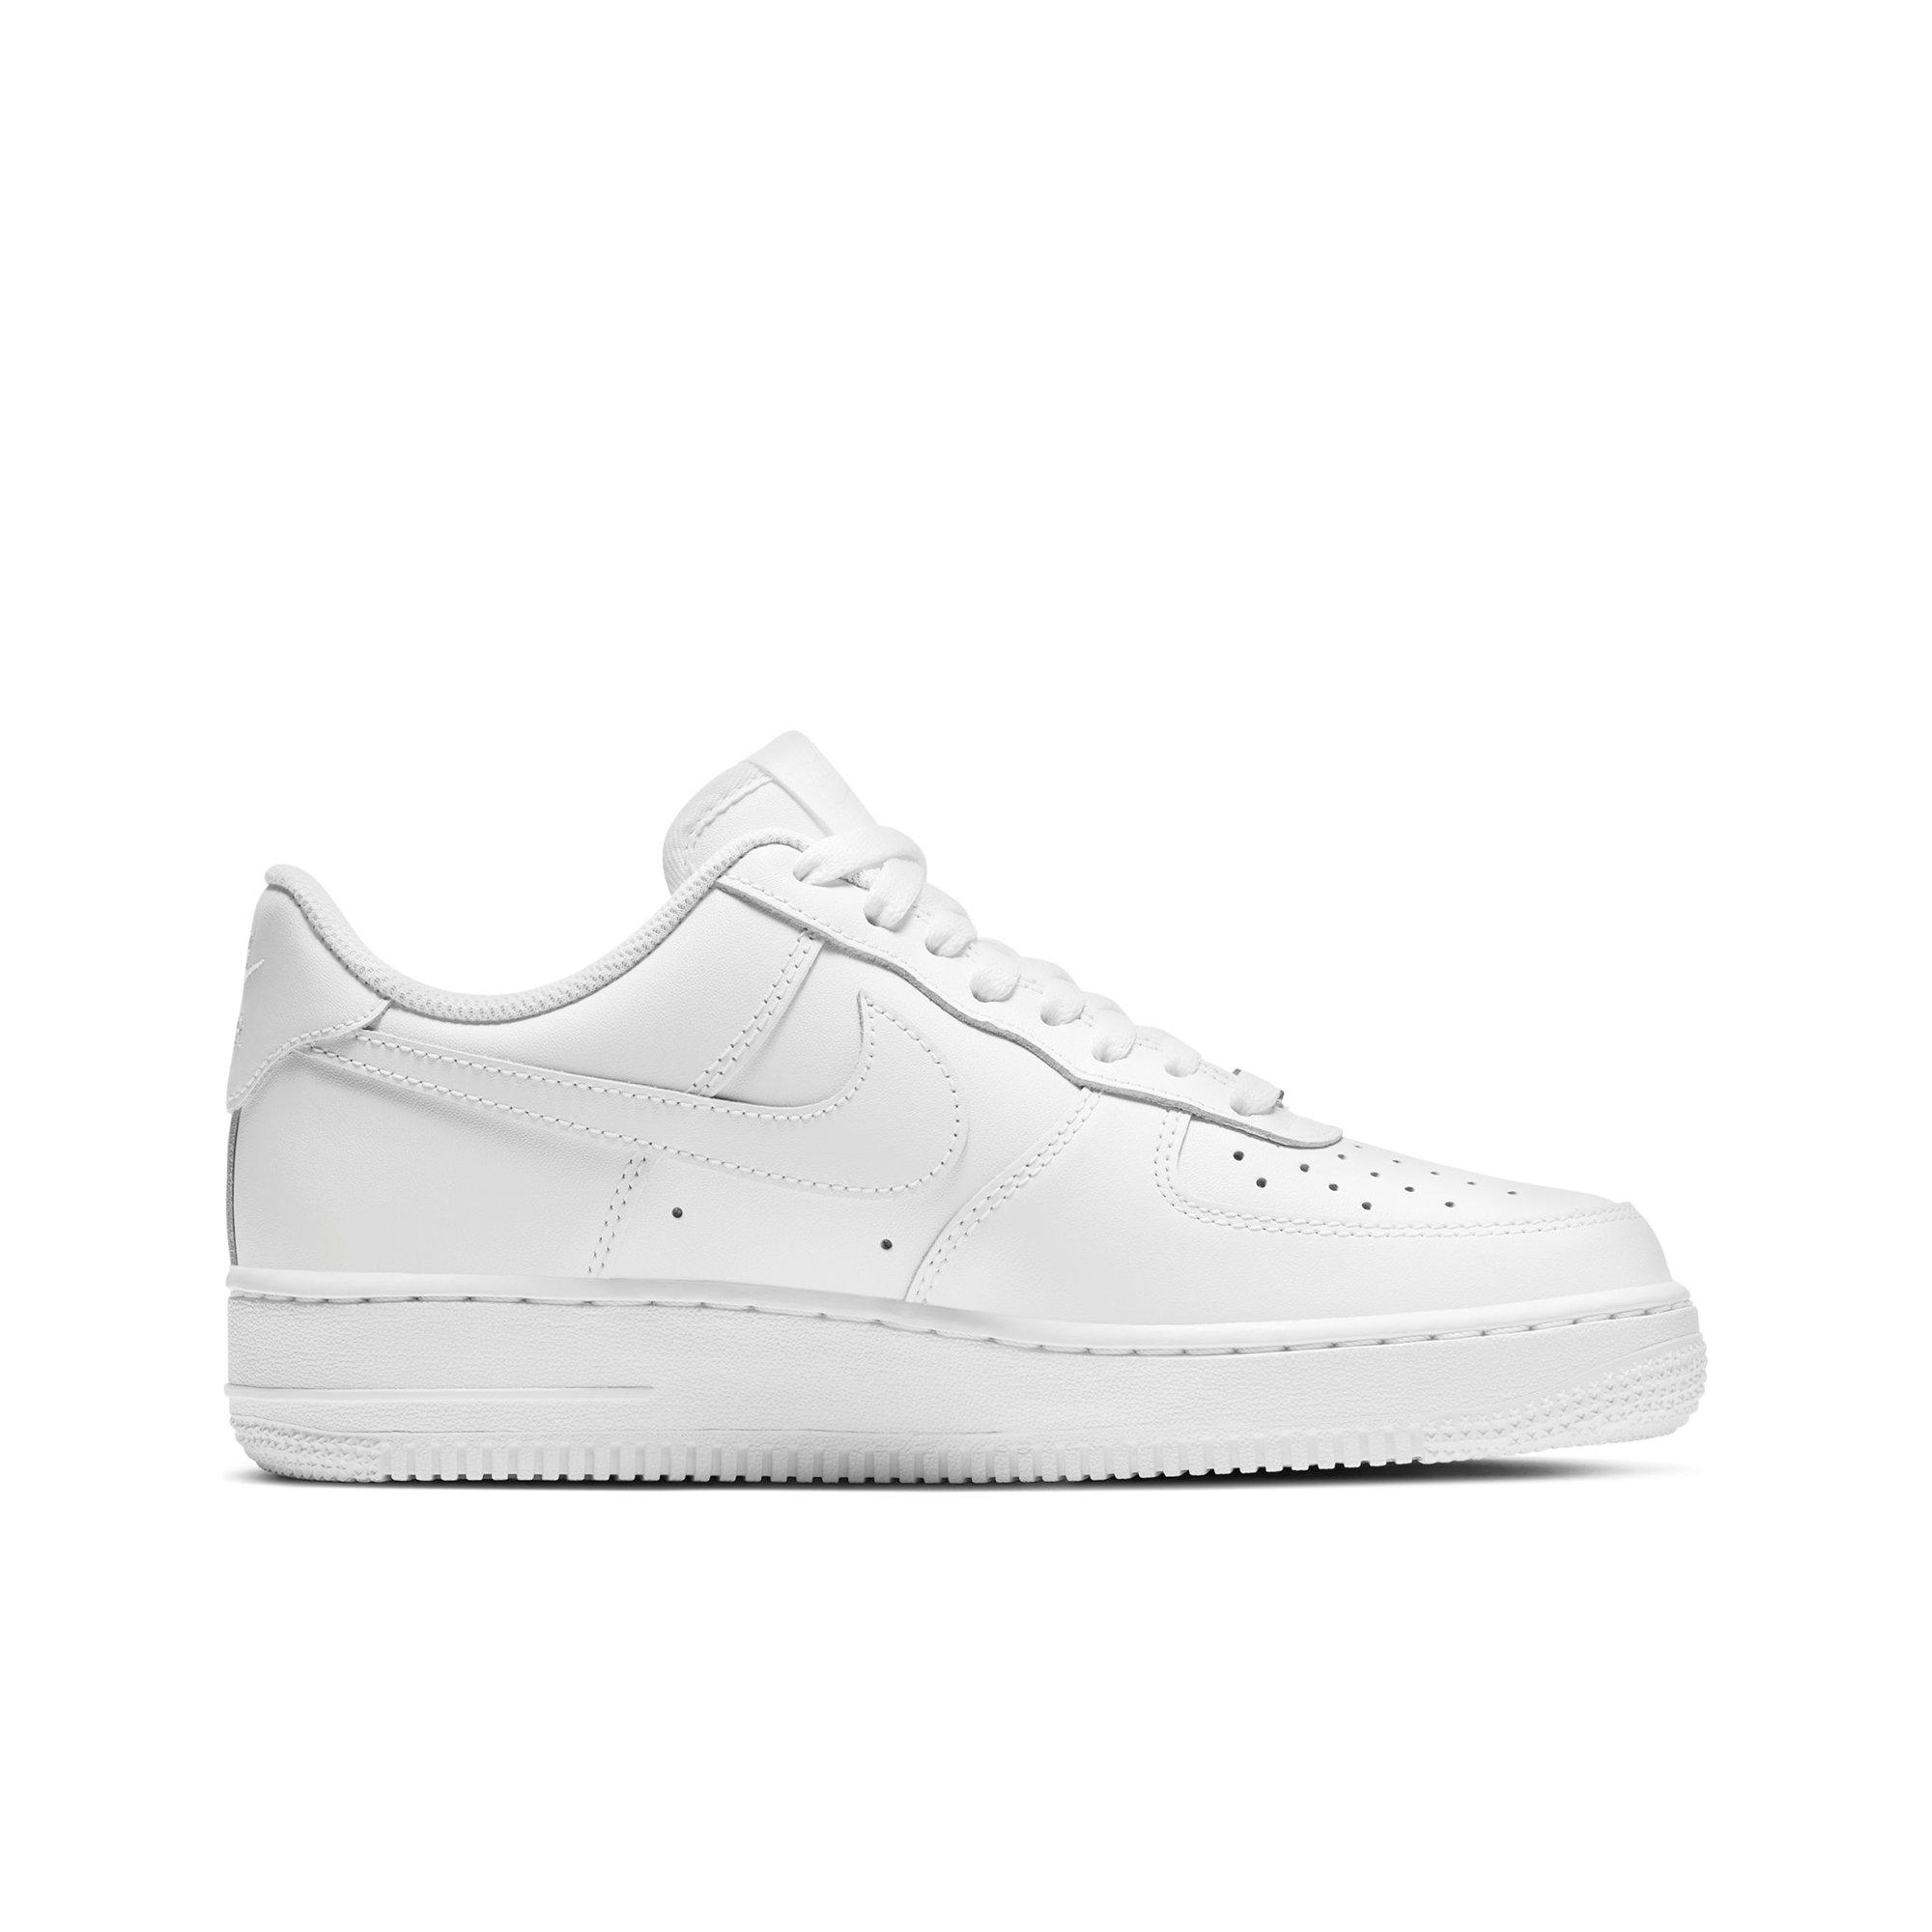 Nike Air Force 1 LE "White/White" Women's Shoe